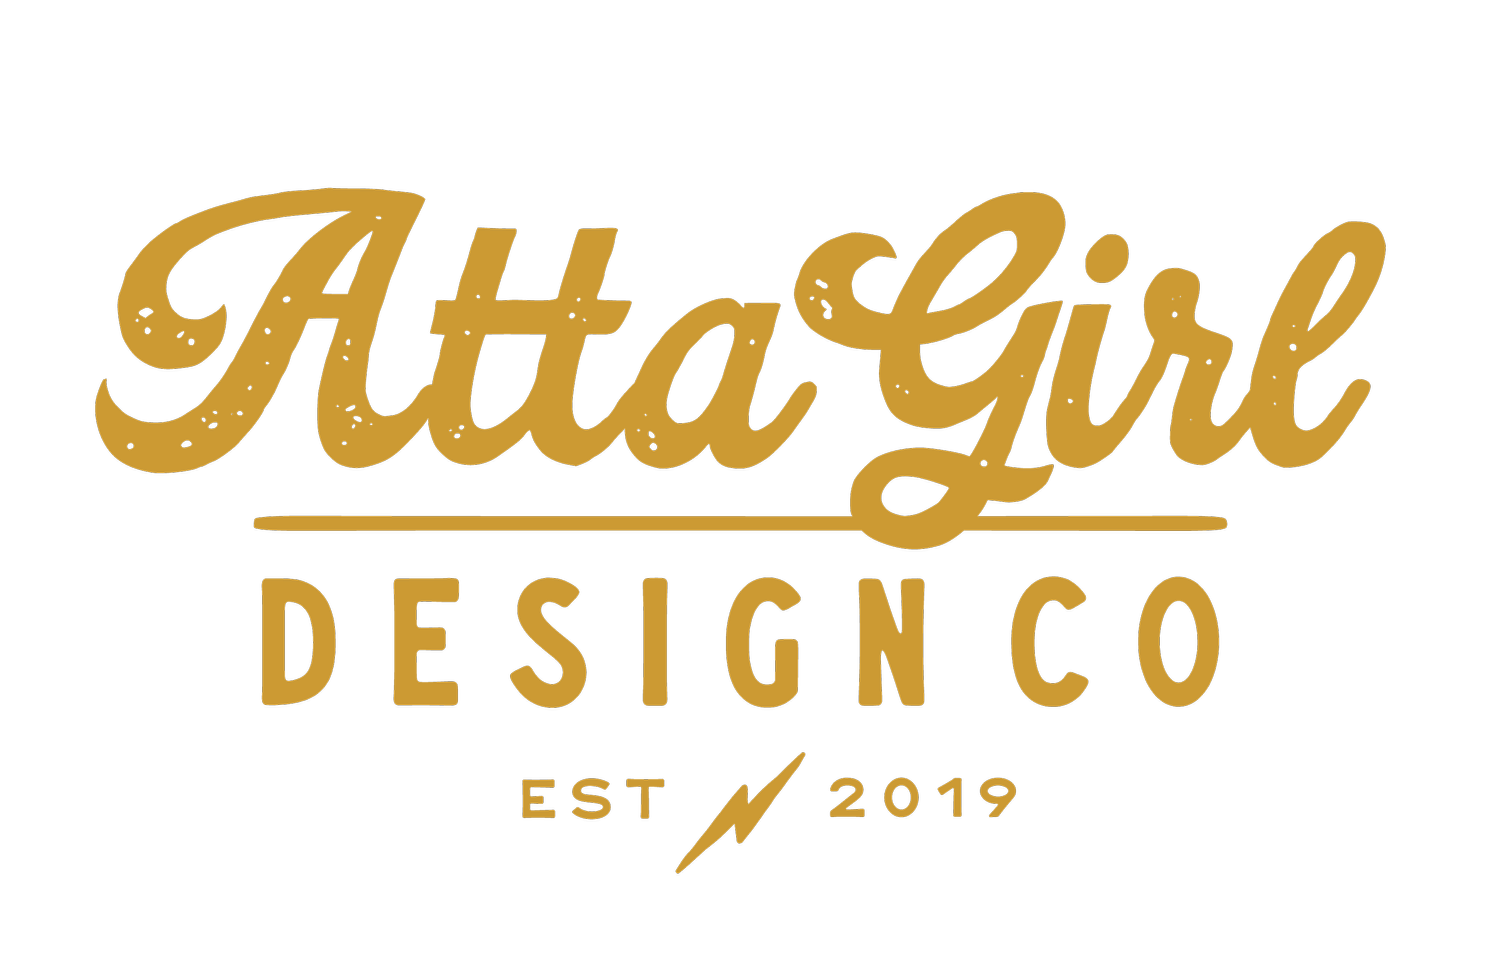 Atta Girl Design Co - Brand Design, Illustration, Merch